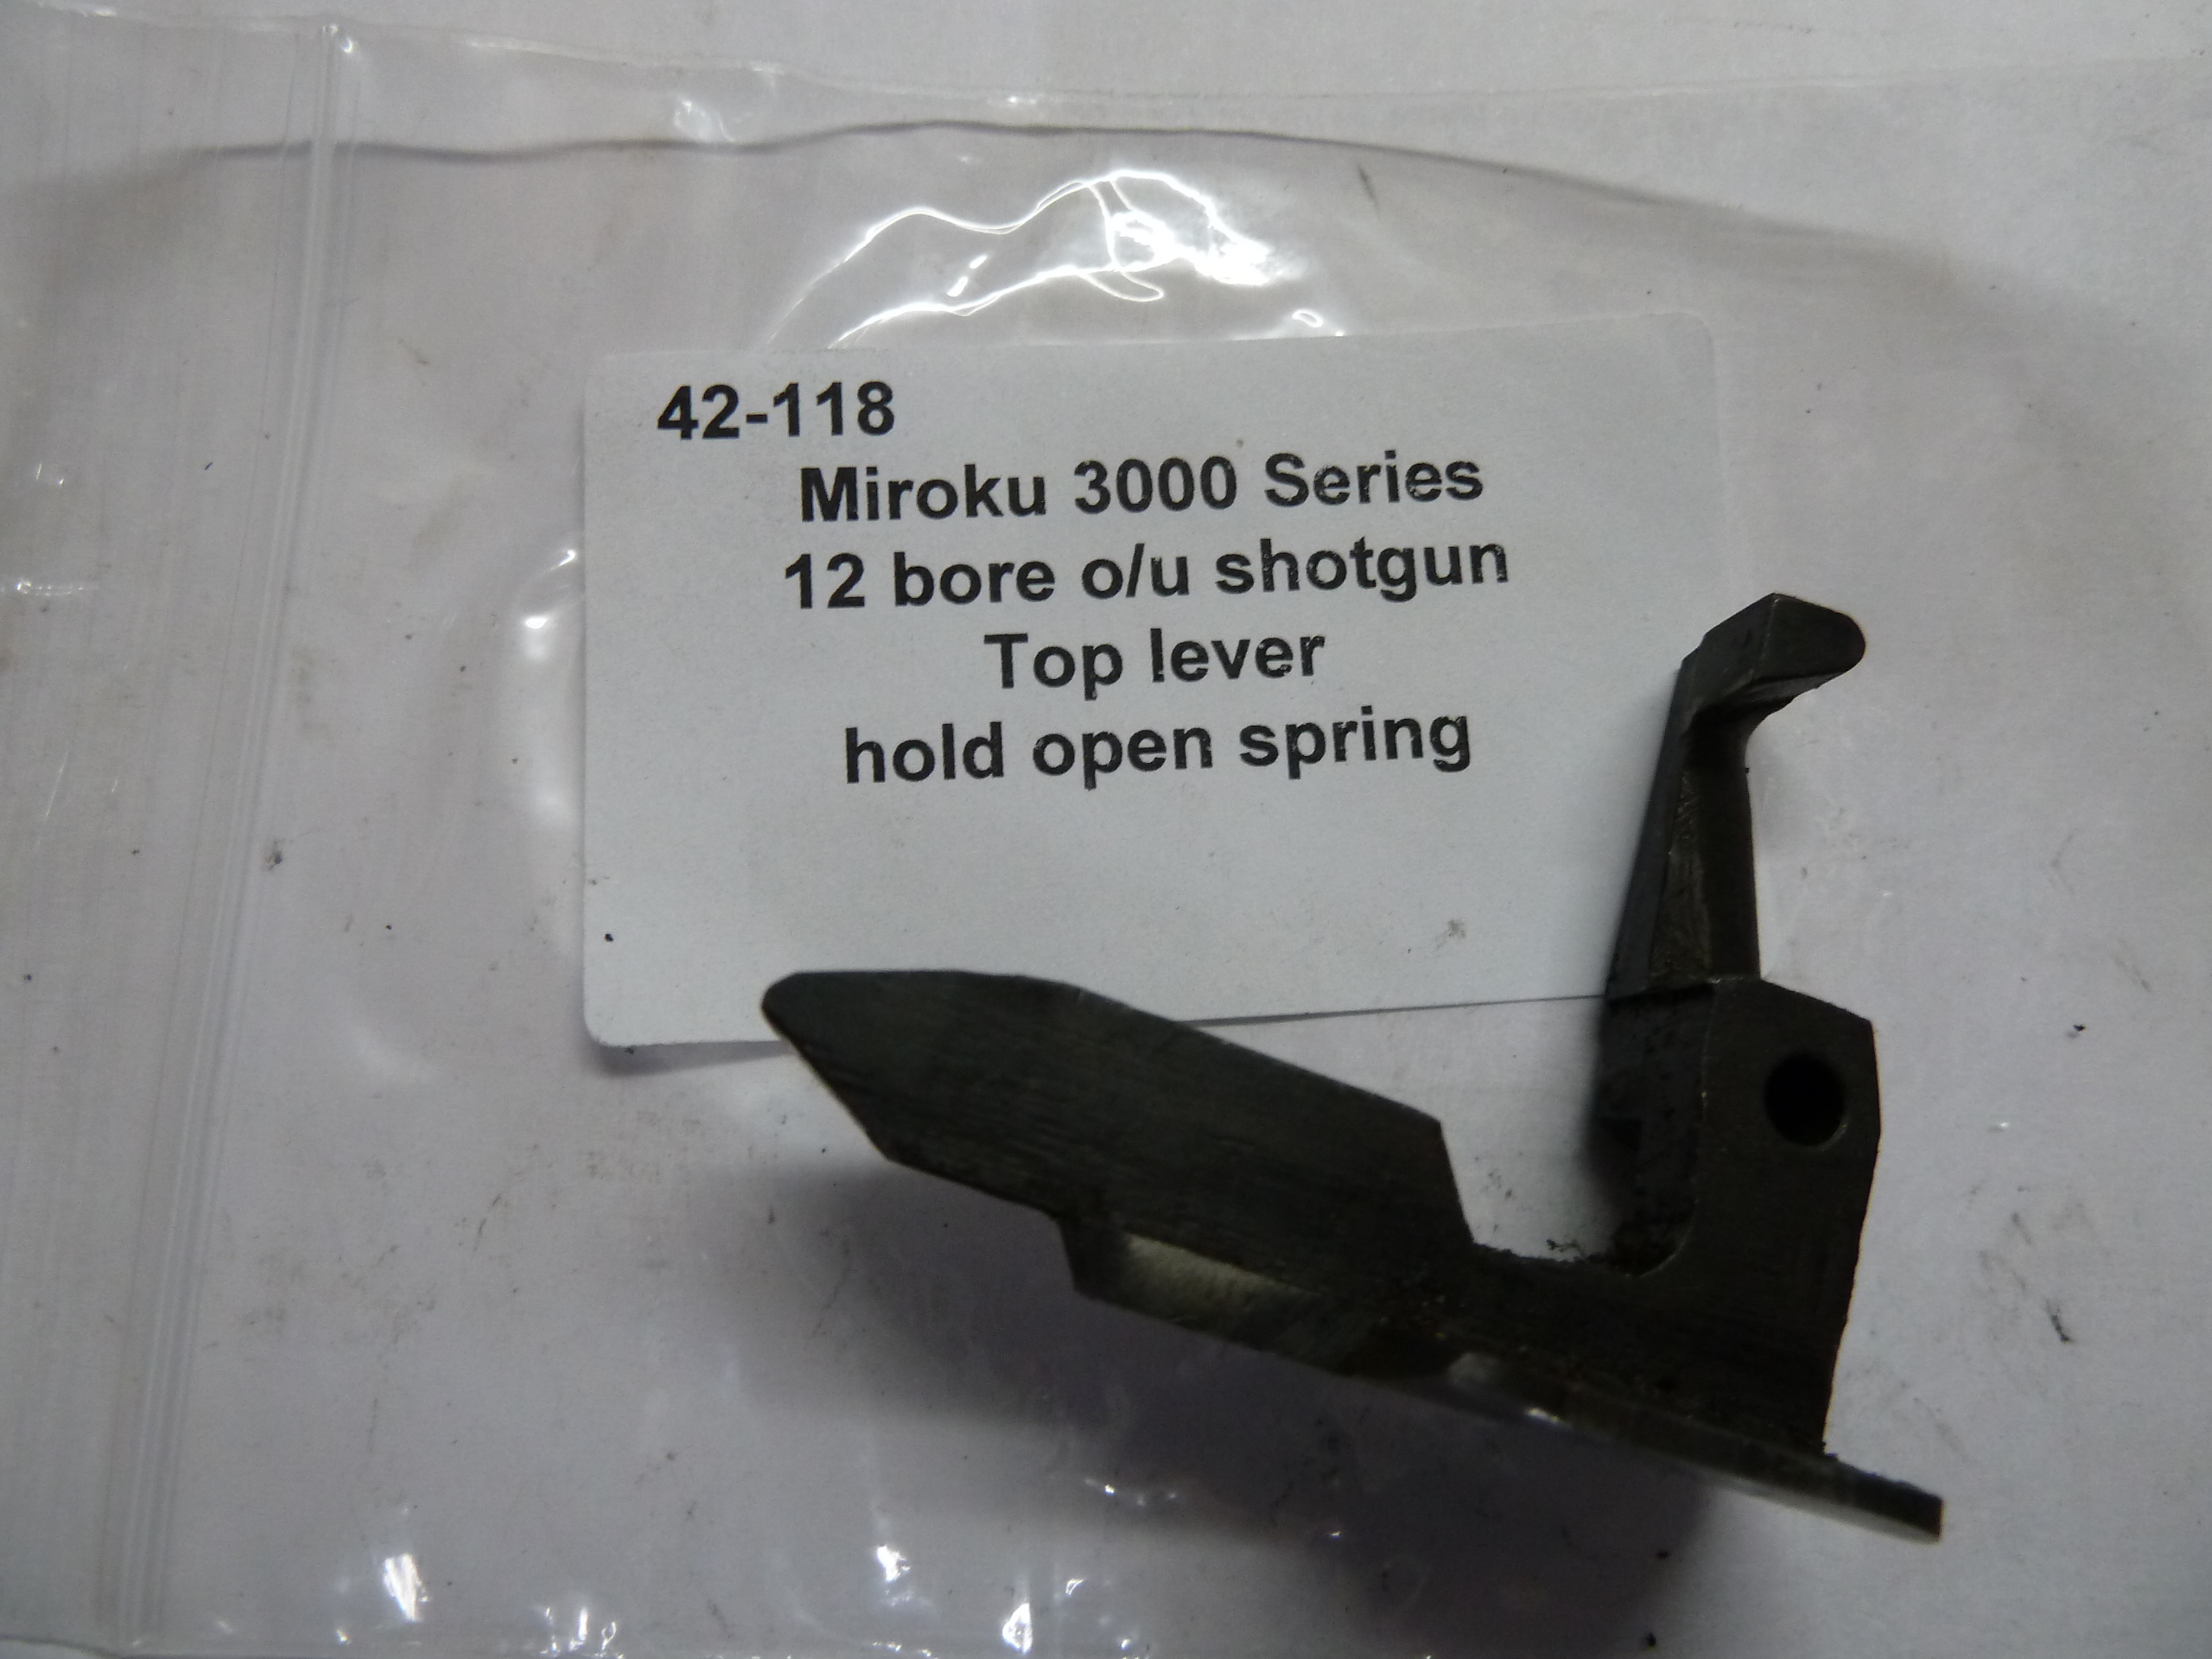 Miroku 3000 series top lever hold open spring